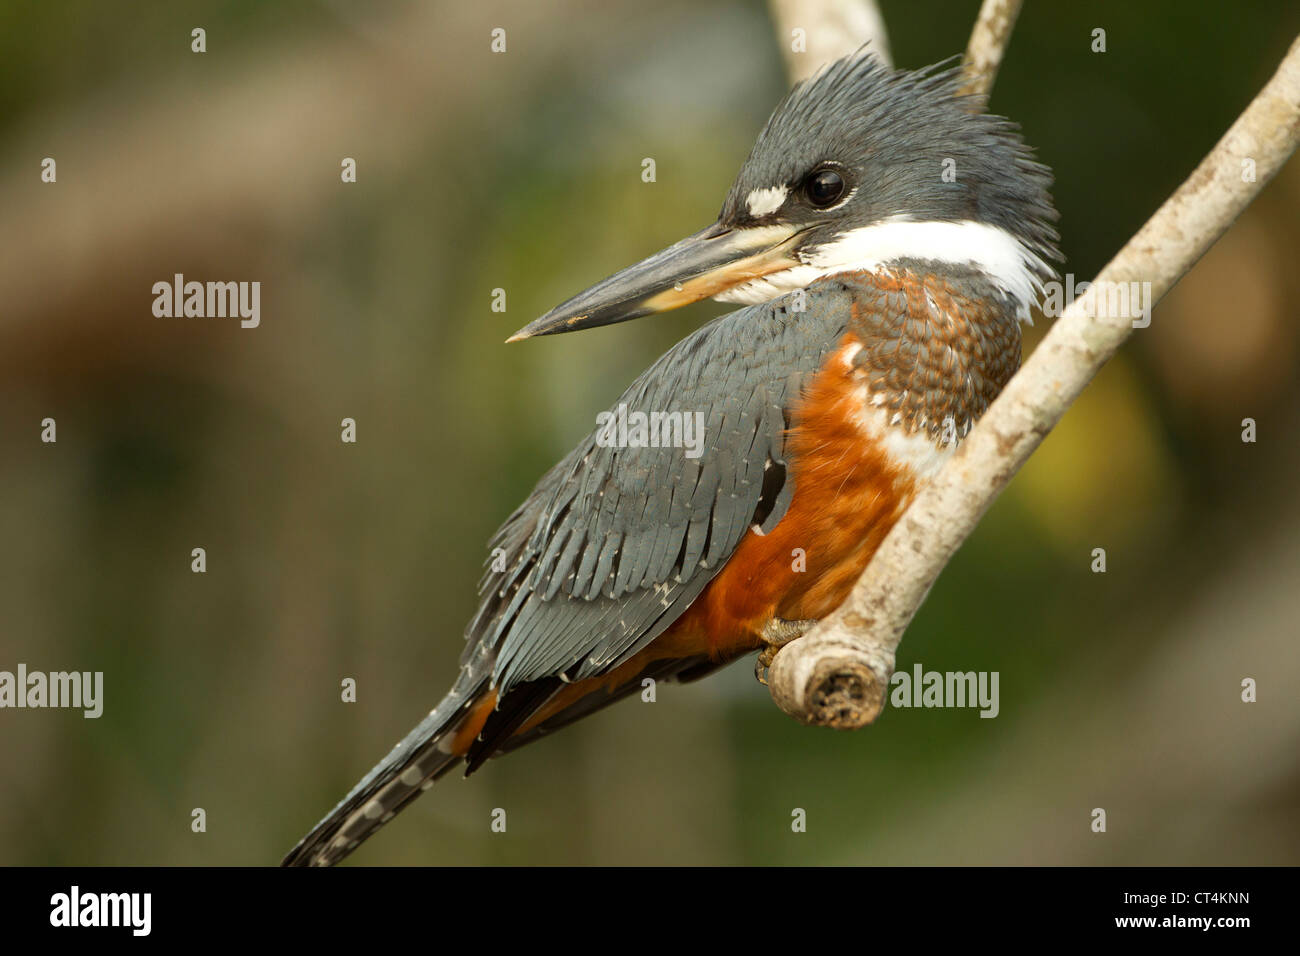 Sud America, Brasile, Pantanal, inanellati Kingfisher, Ceryle torquata, appollaiato sul ramo, Foto Stock